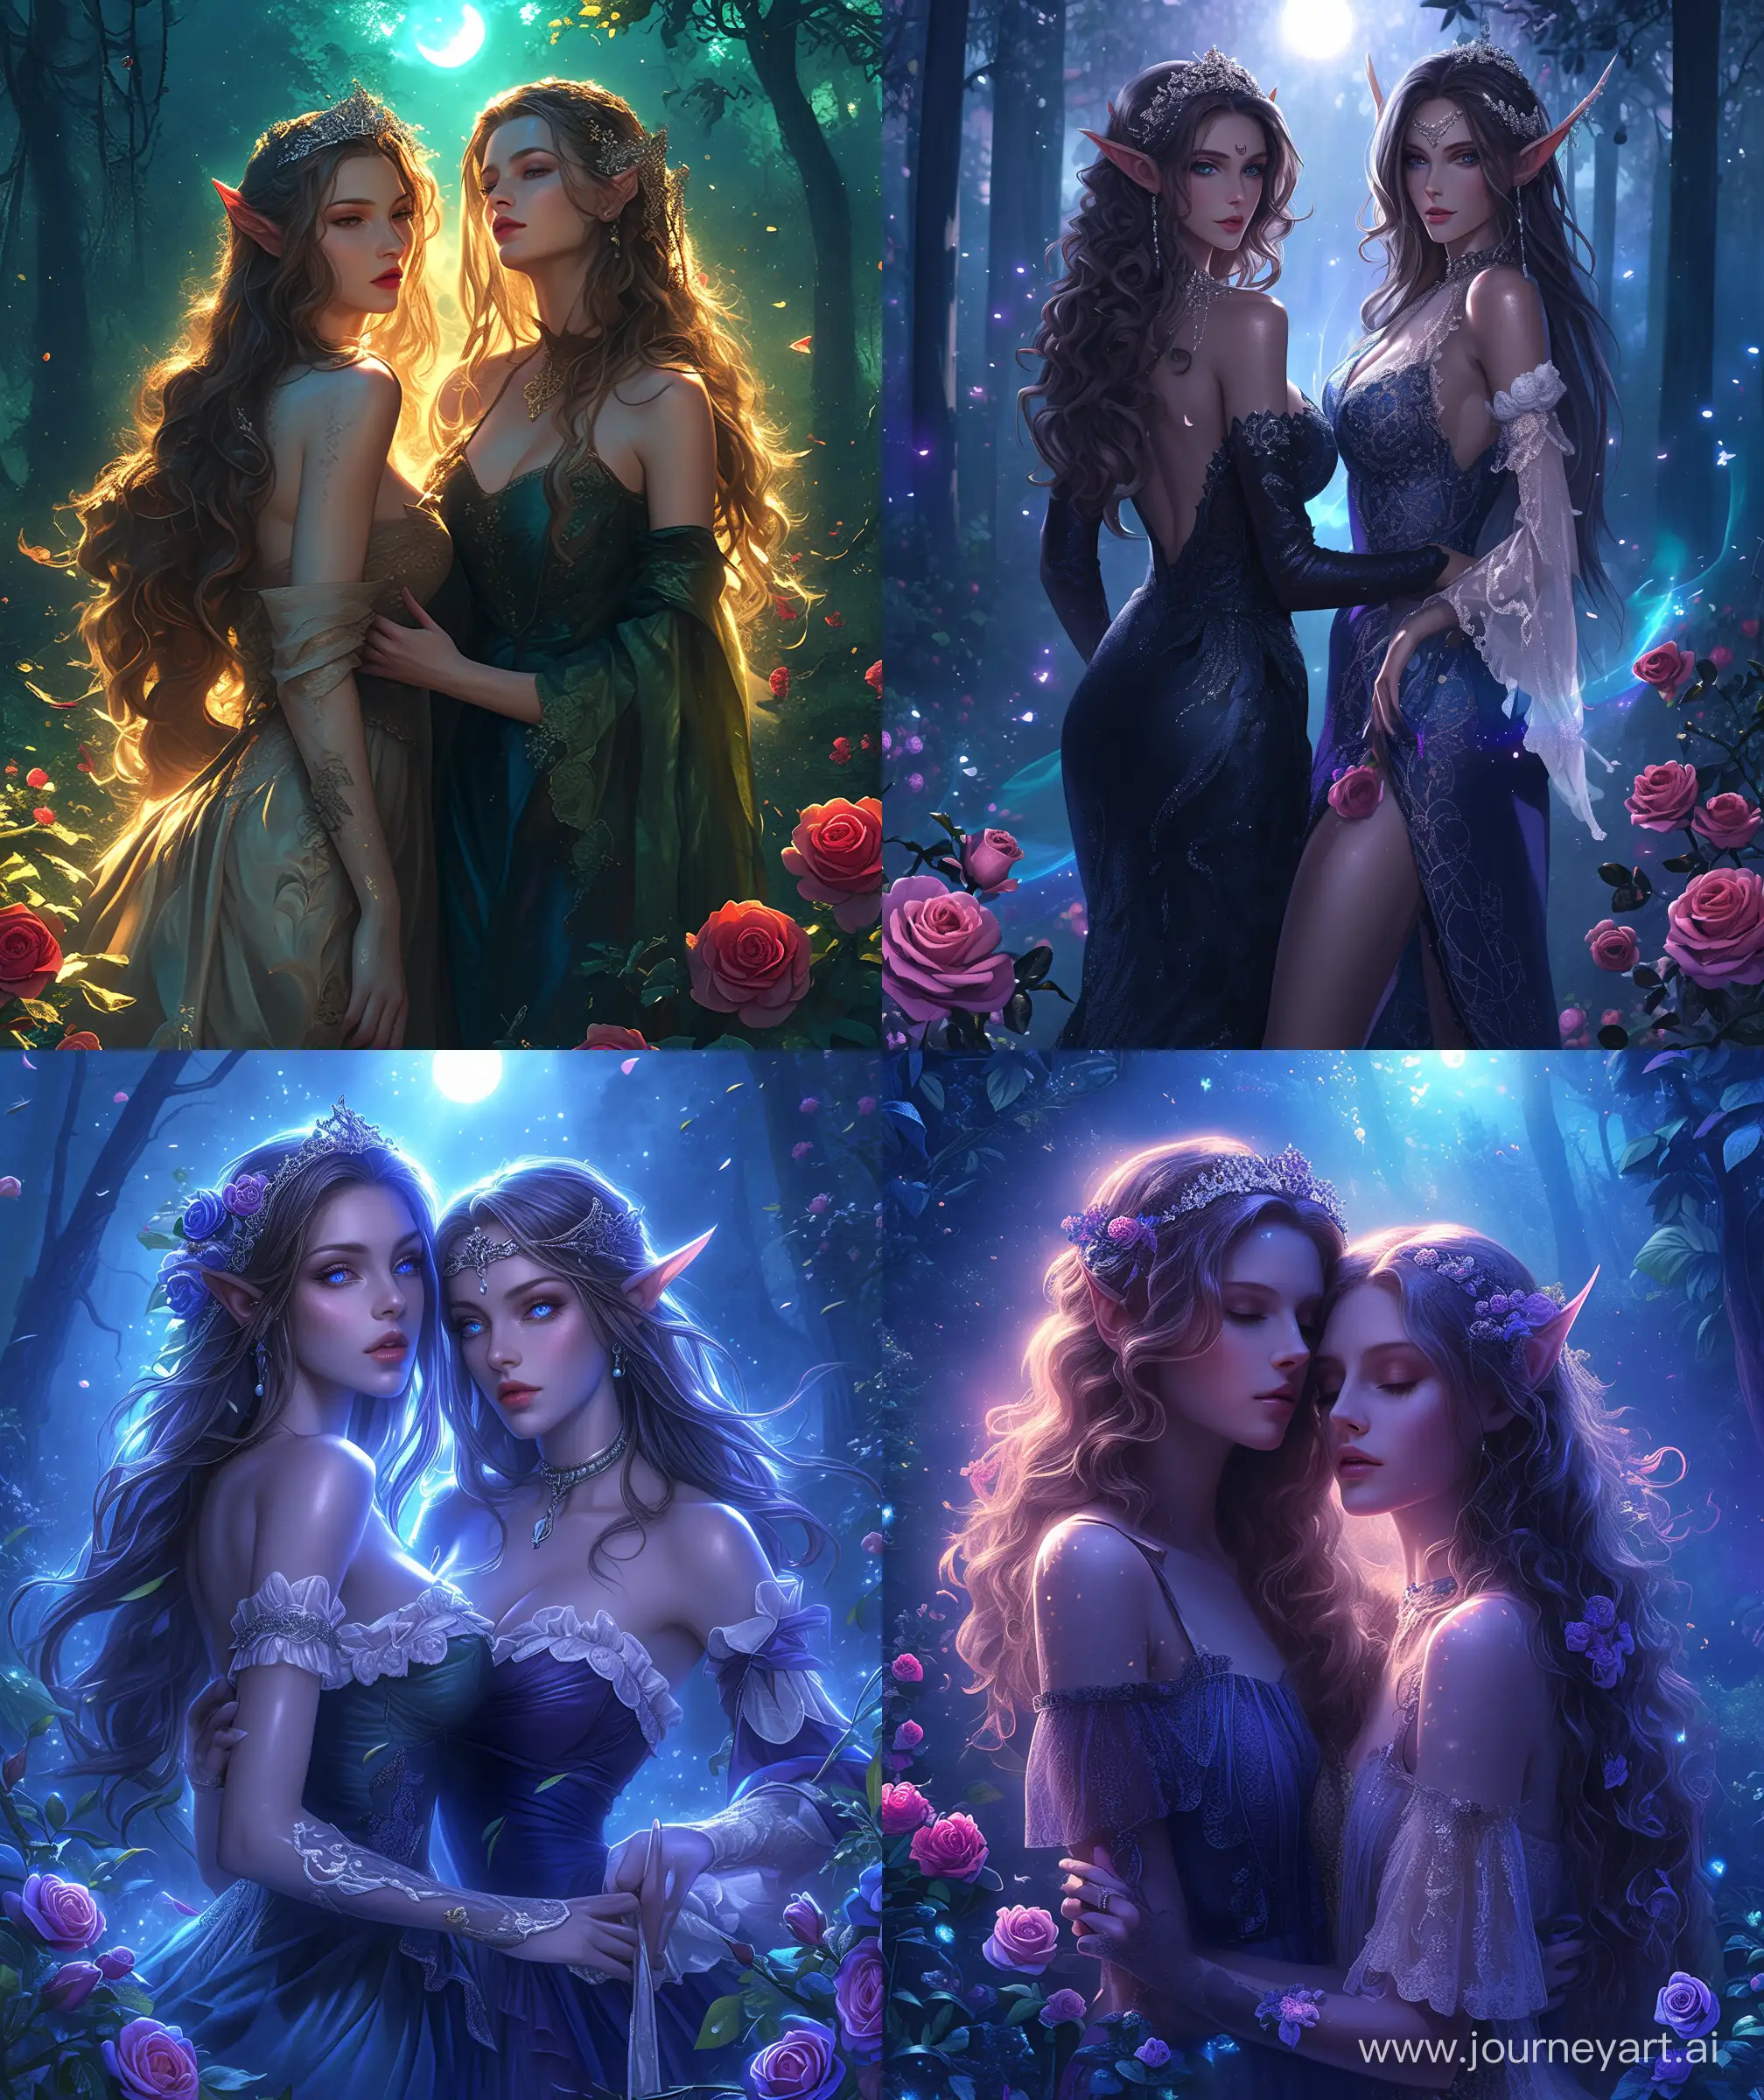 Enchanting-Moonlit-Elves-Sisters-in-Stunning-Dresses-Amidst-a-Floral-Fantasy